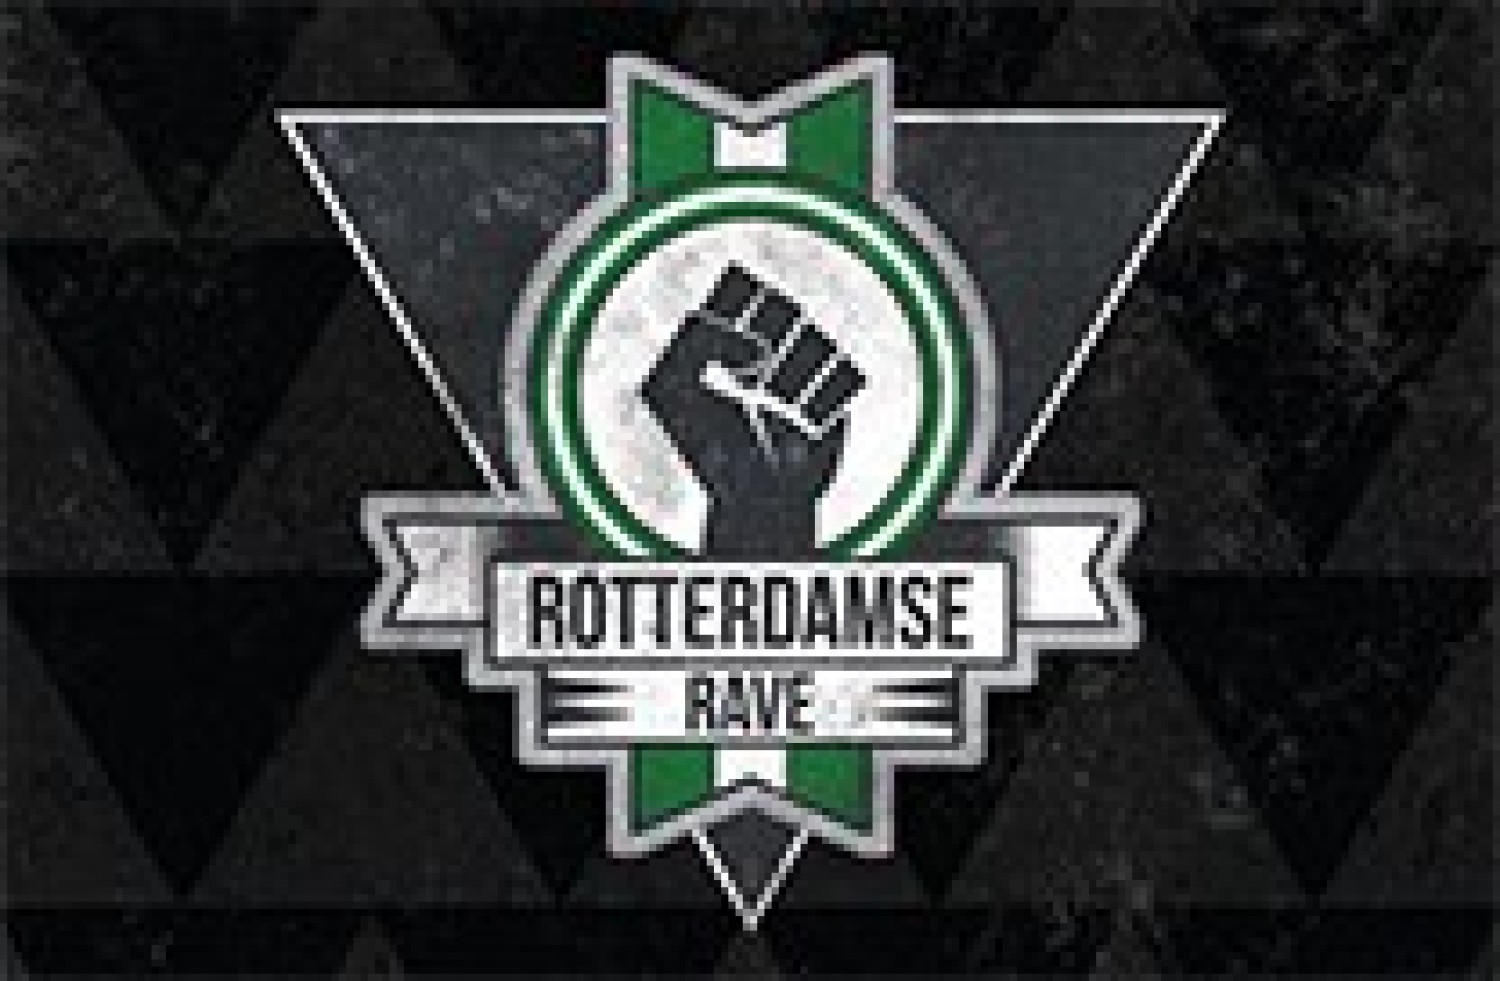 Party report: Rotterdamse Rave, Rotterdam (24-03-2016)